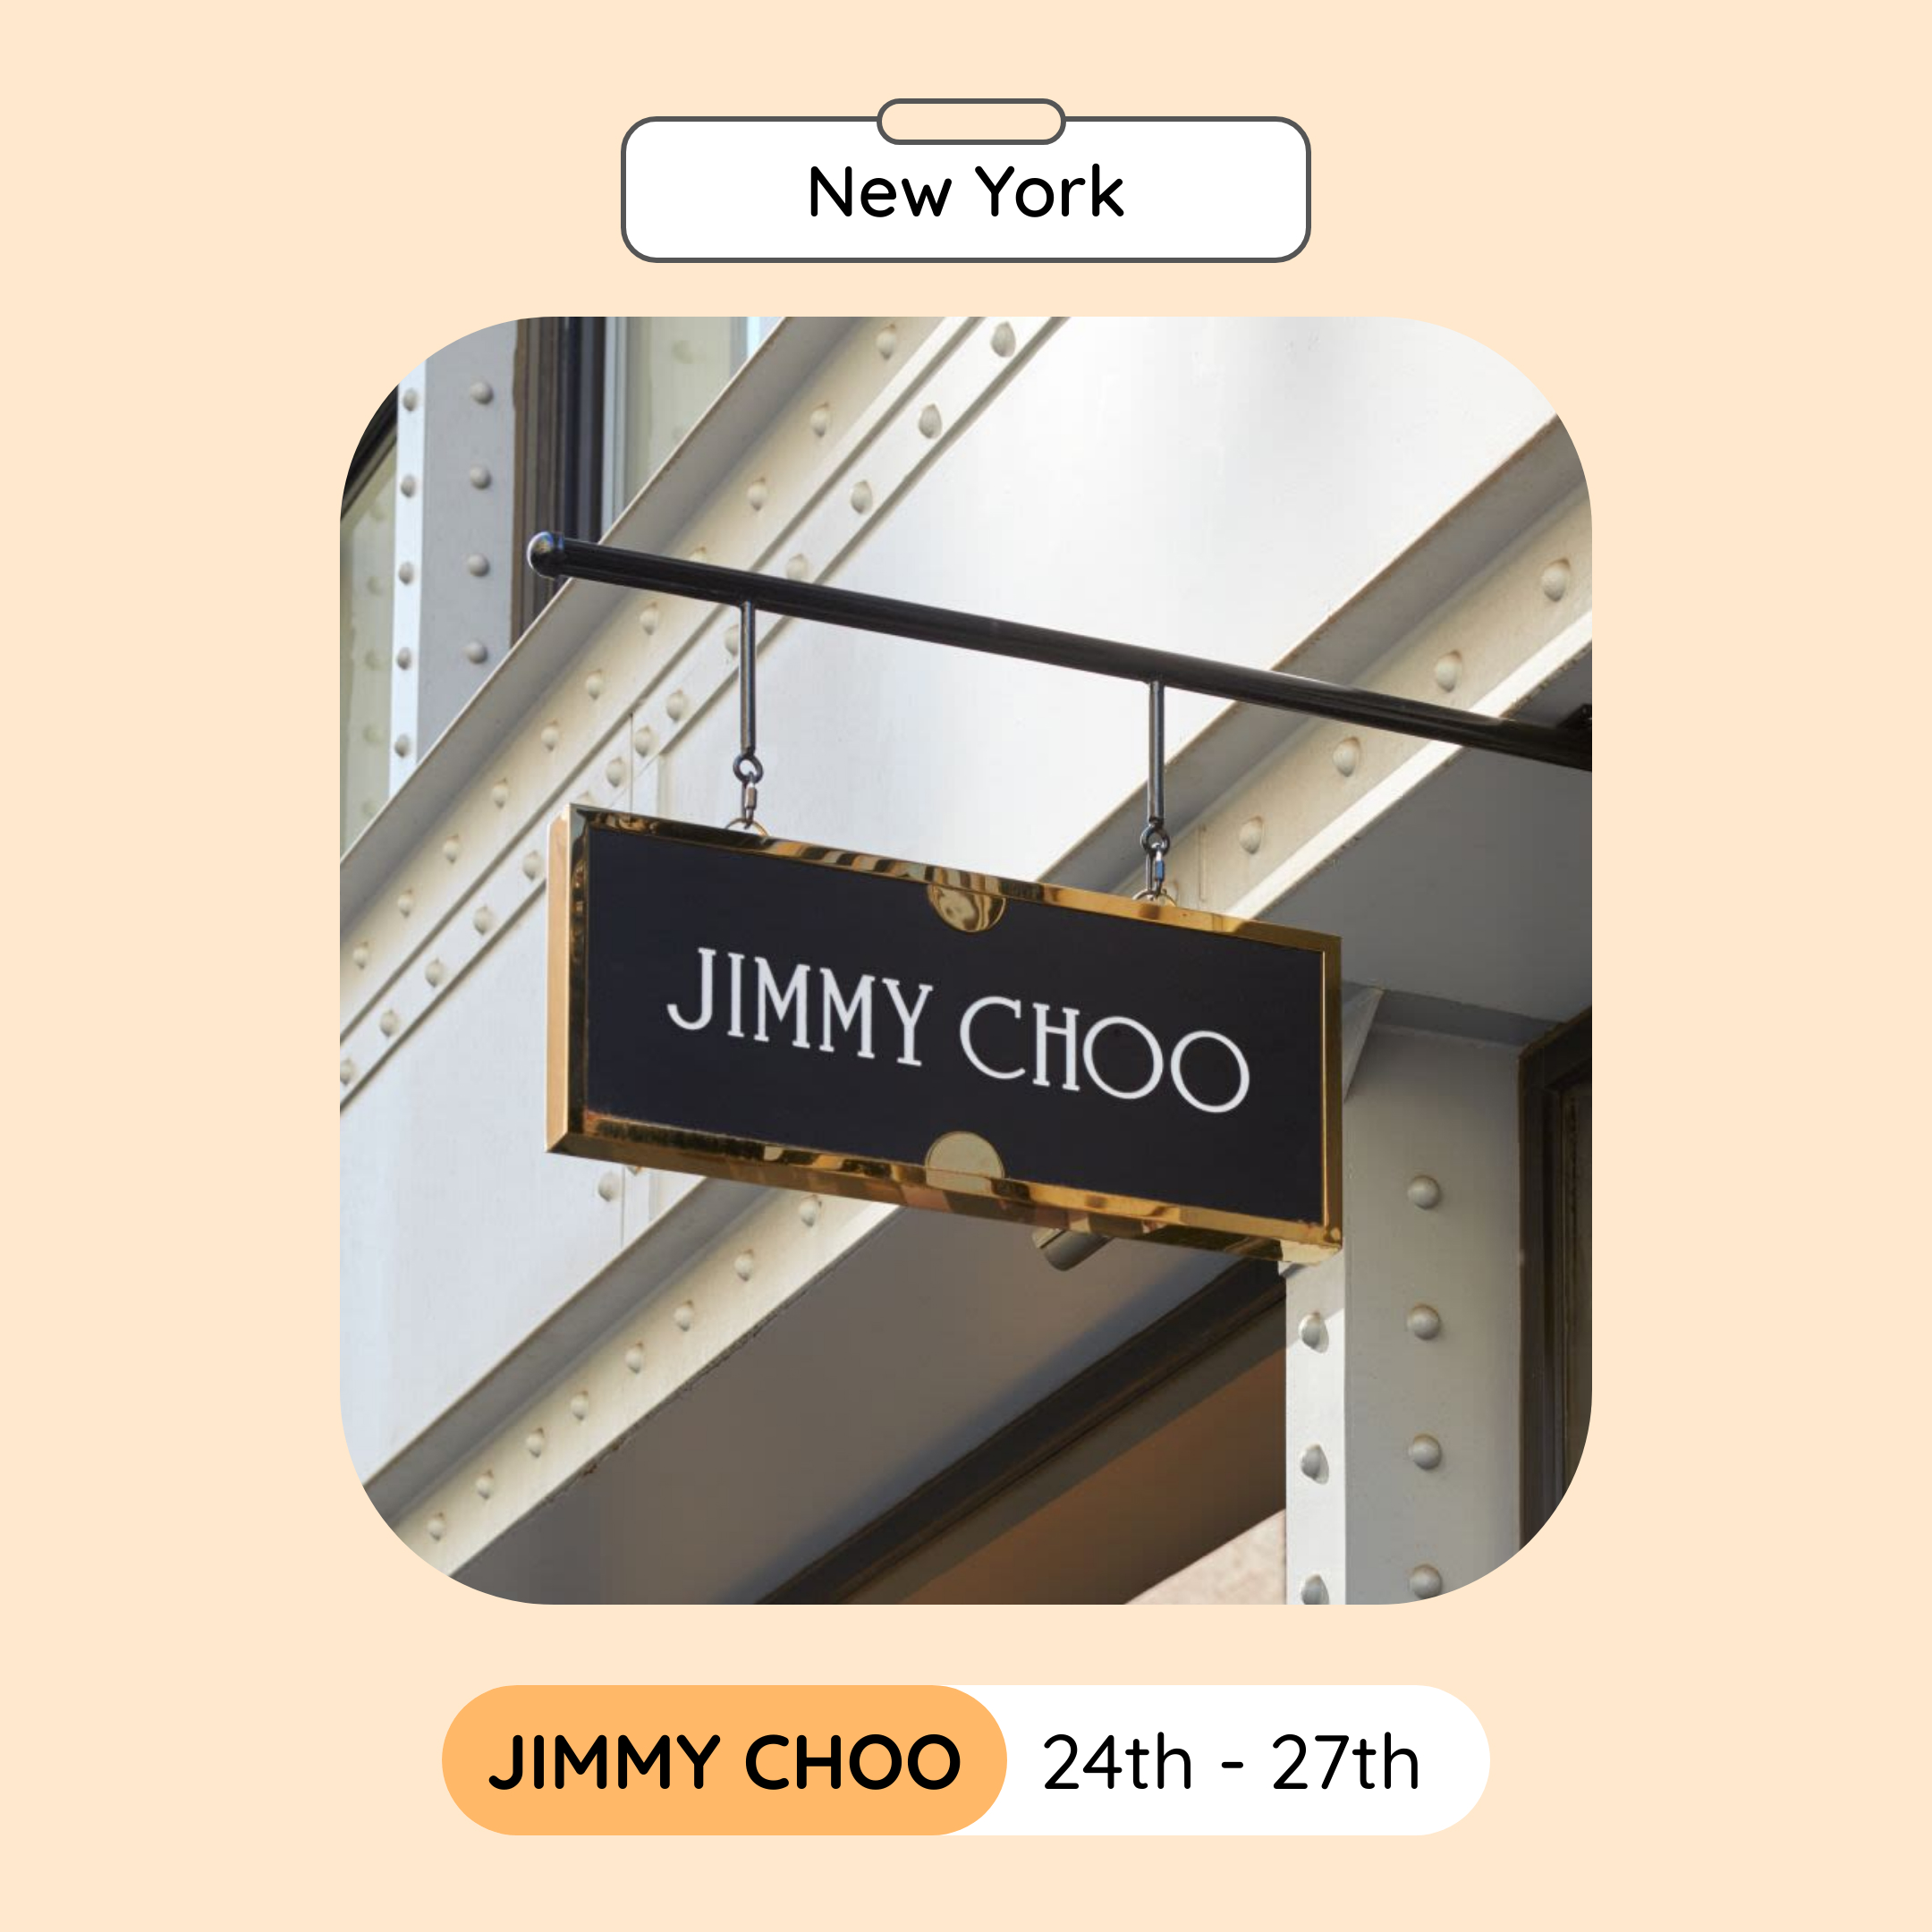 Jimmy Choo Footwear and Accessories New York Sample Sale